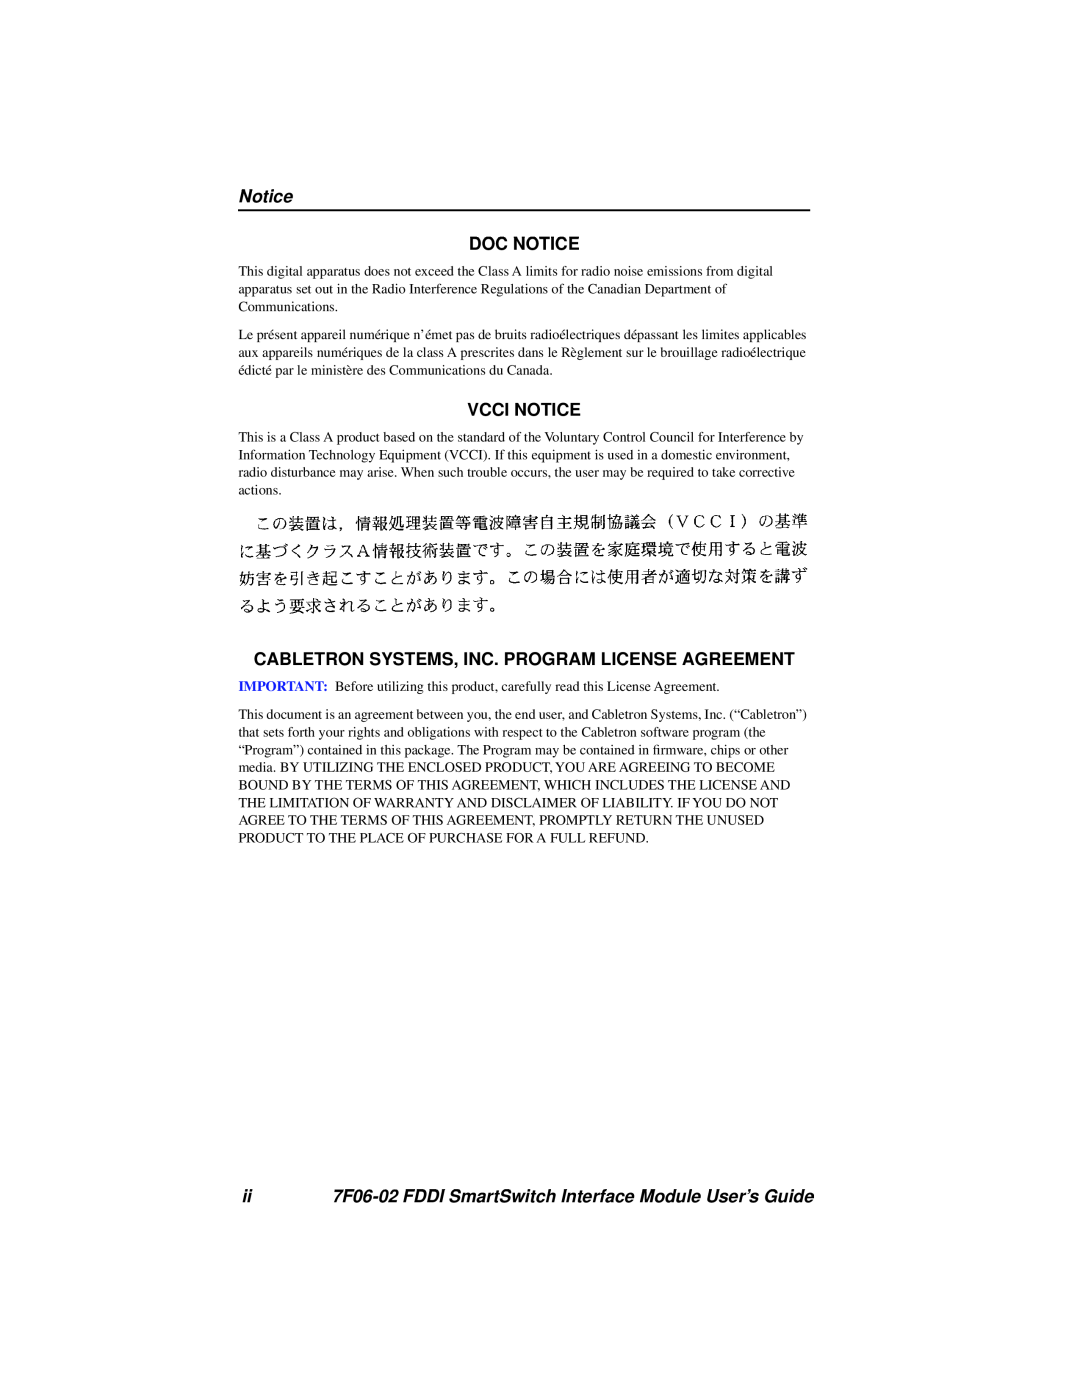 Cabletron Systems FDDI manual Doc Notice, Vcci Notice, Cabletron Systems, Inc. Program License Agreement 